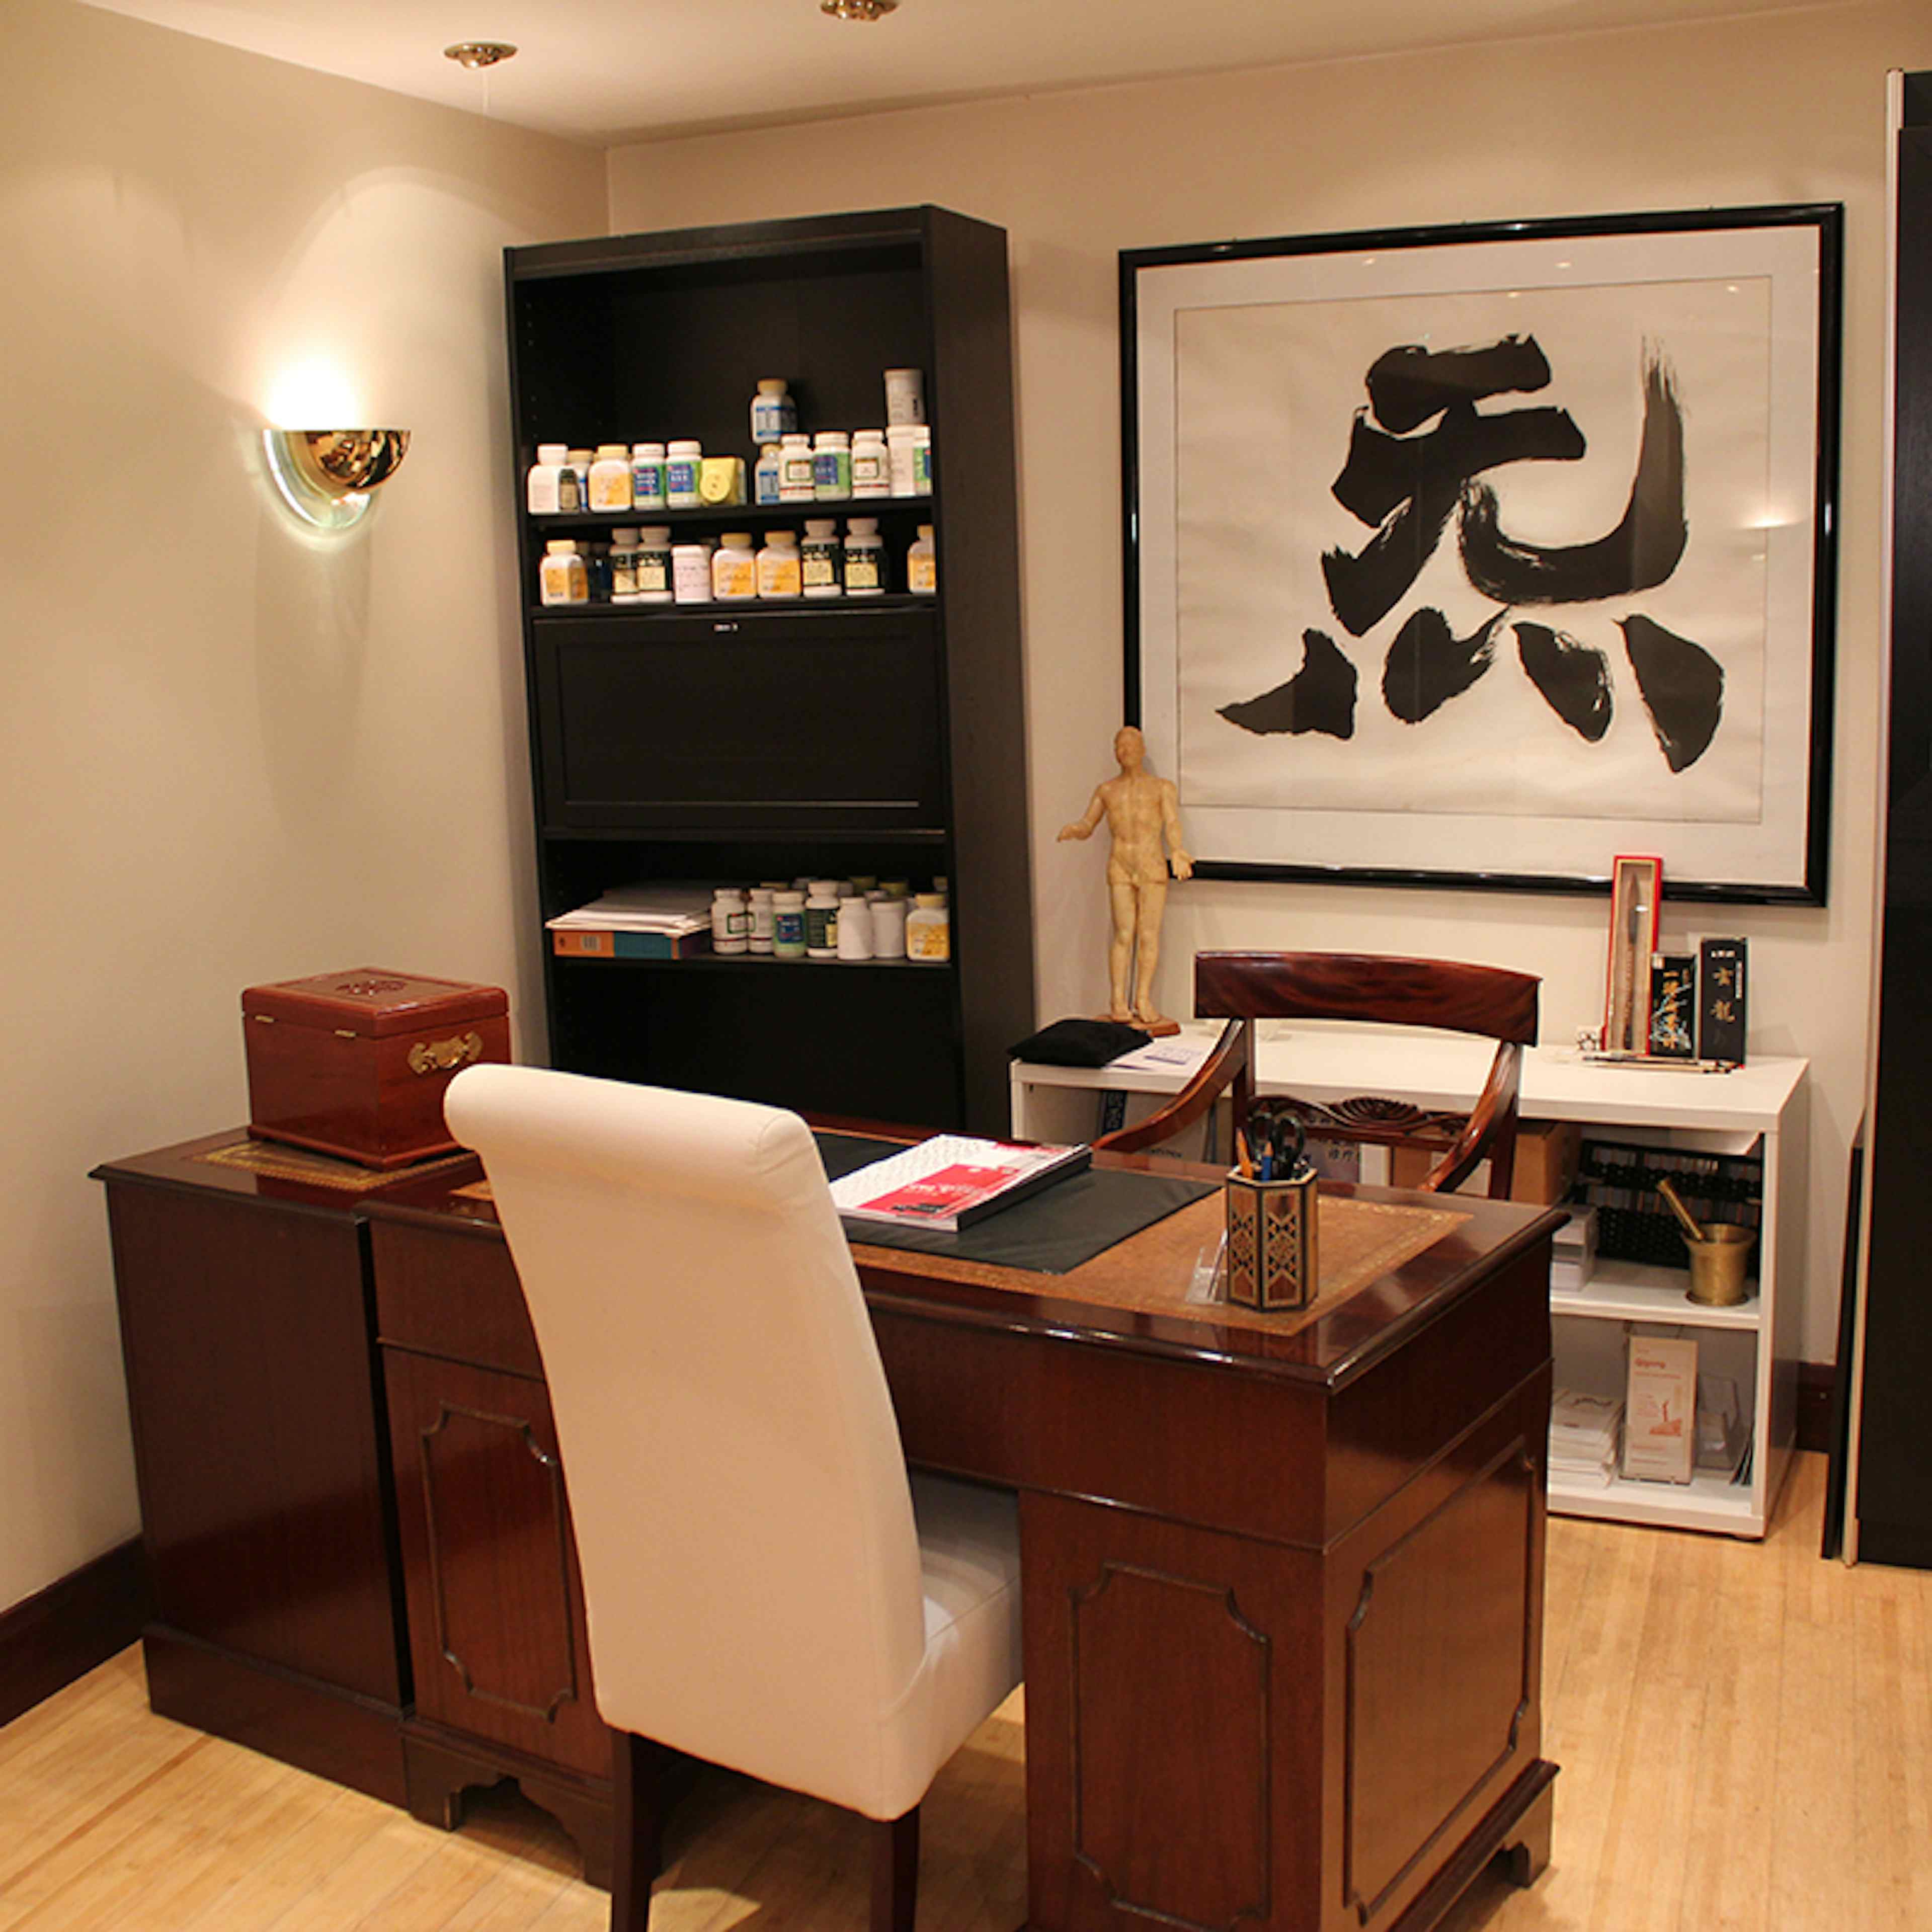 Venue At Simon Lau Centre - Consultation and Treatment Room image 2